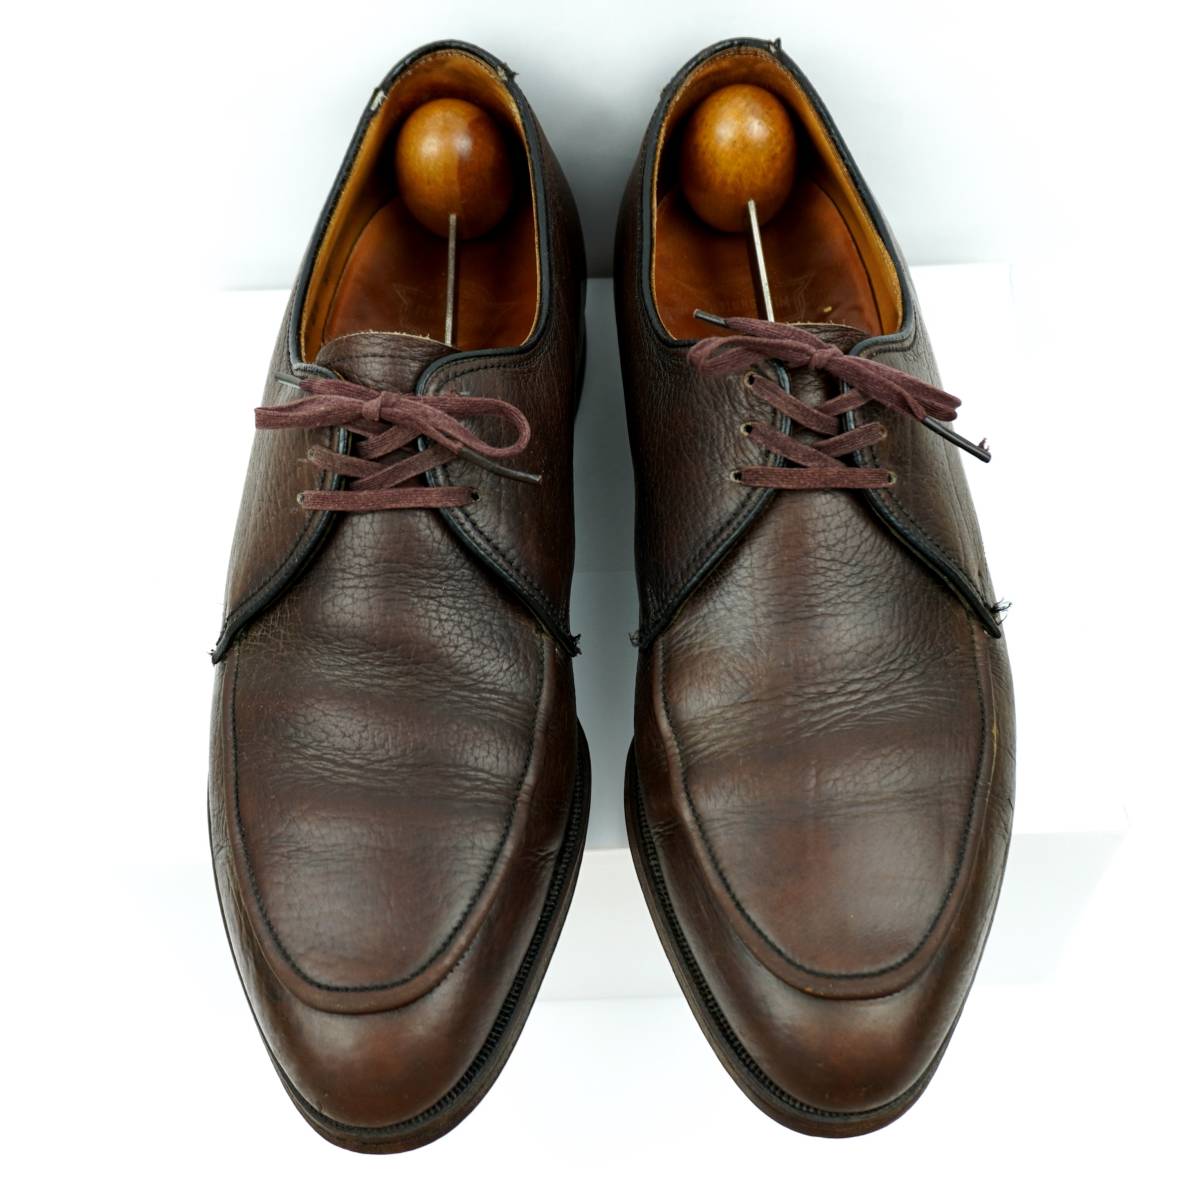 FLORSHEIM THE CHEVRON 1965s US9.0D Vintage フローシャイム シェブロン ユーチップ 革靴 1960年代 ヴィンテージ 27.0cm 古靴_画像2